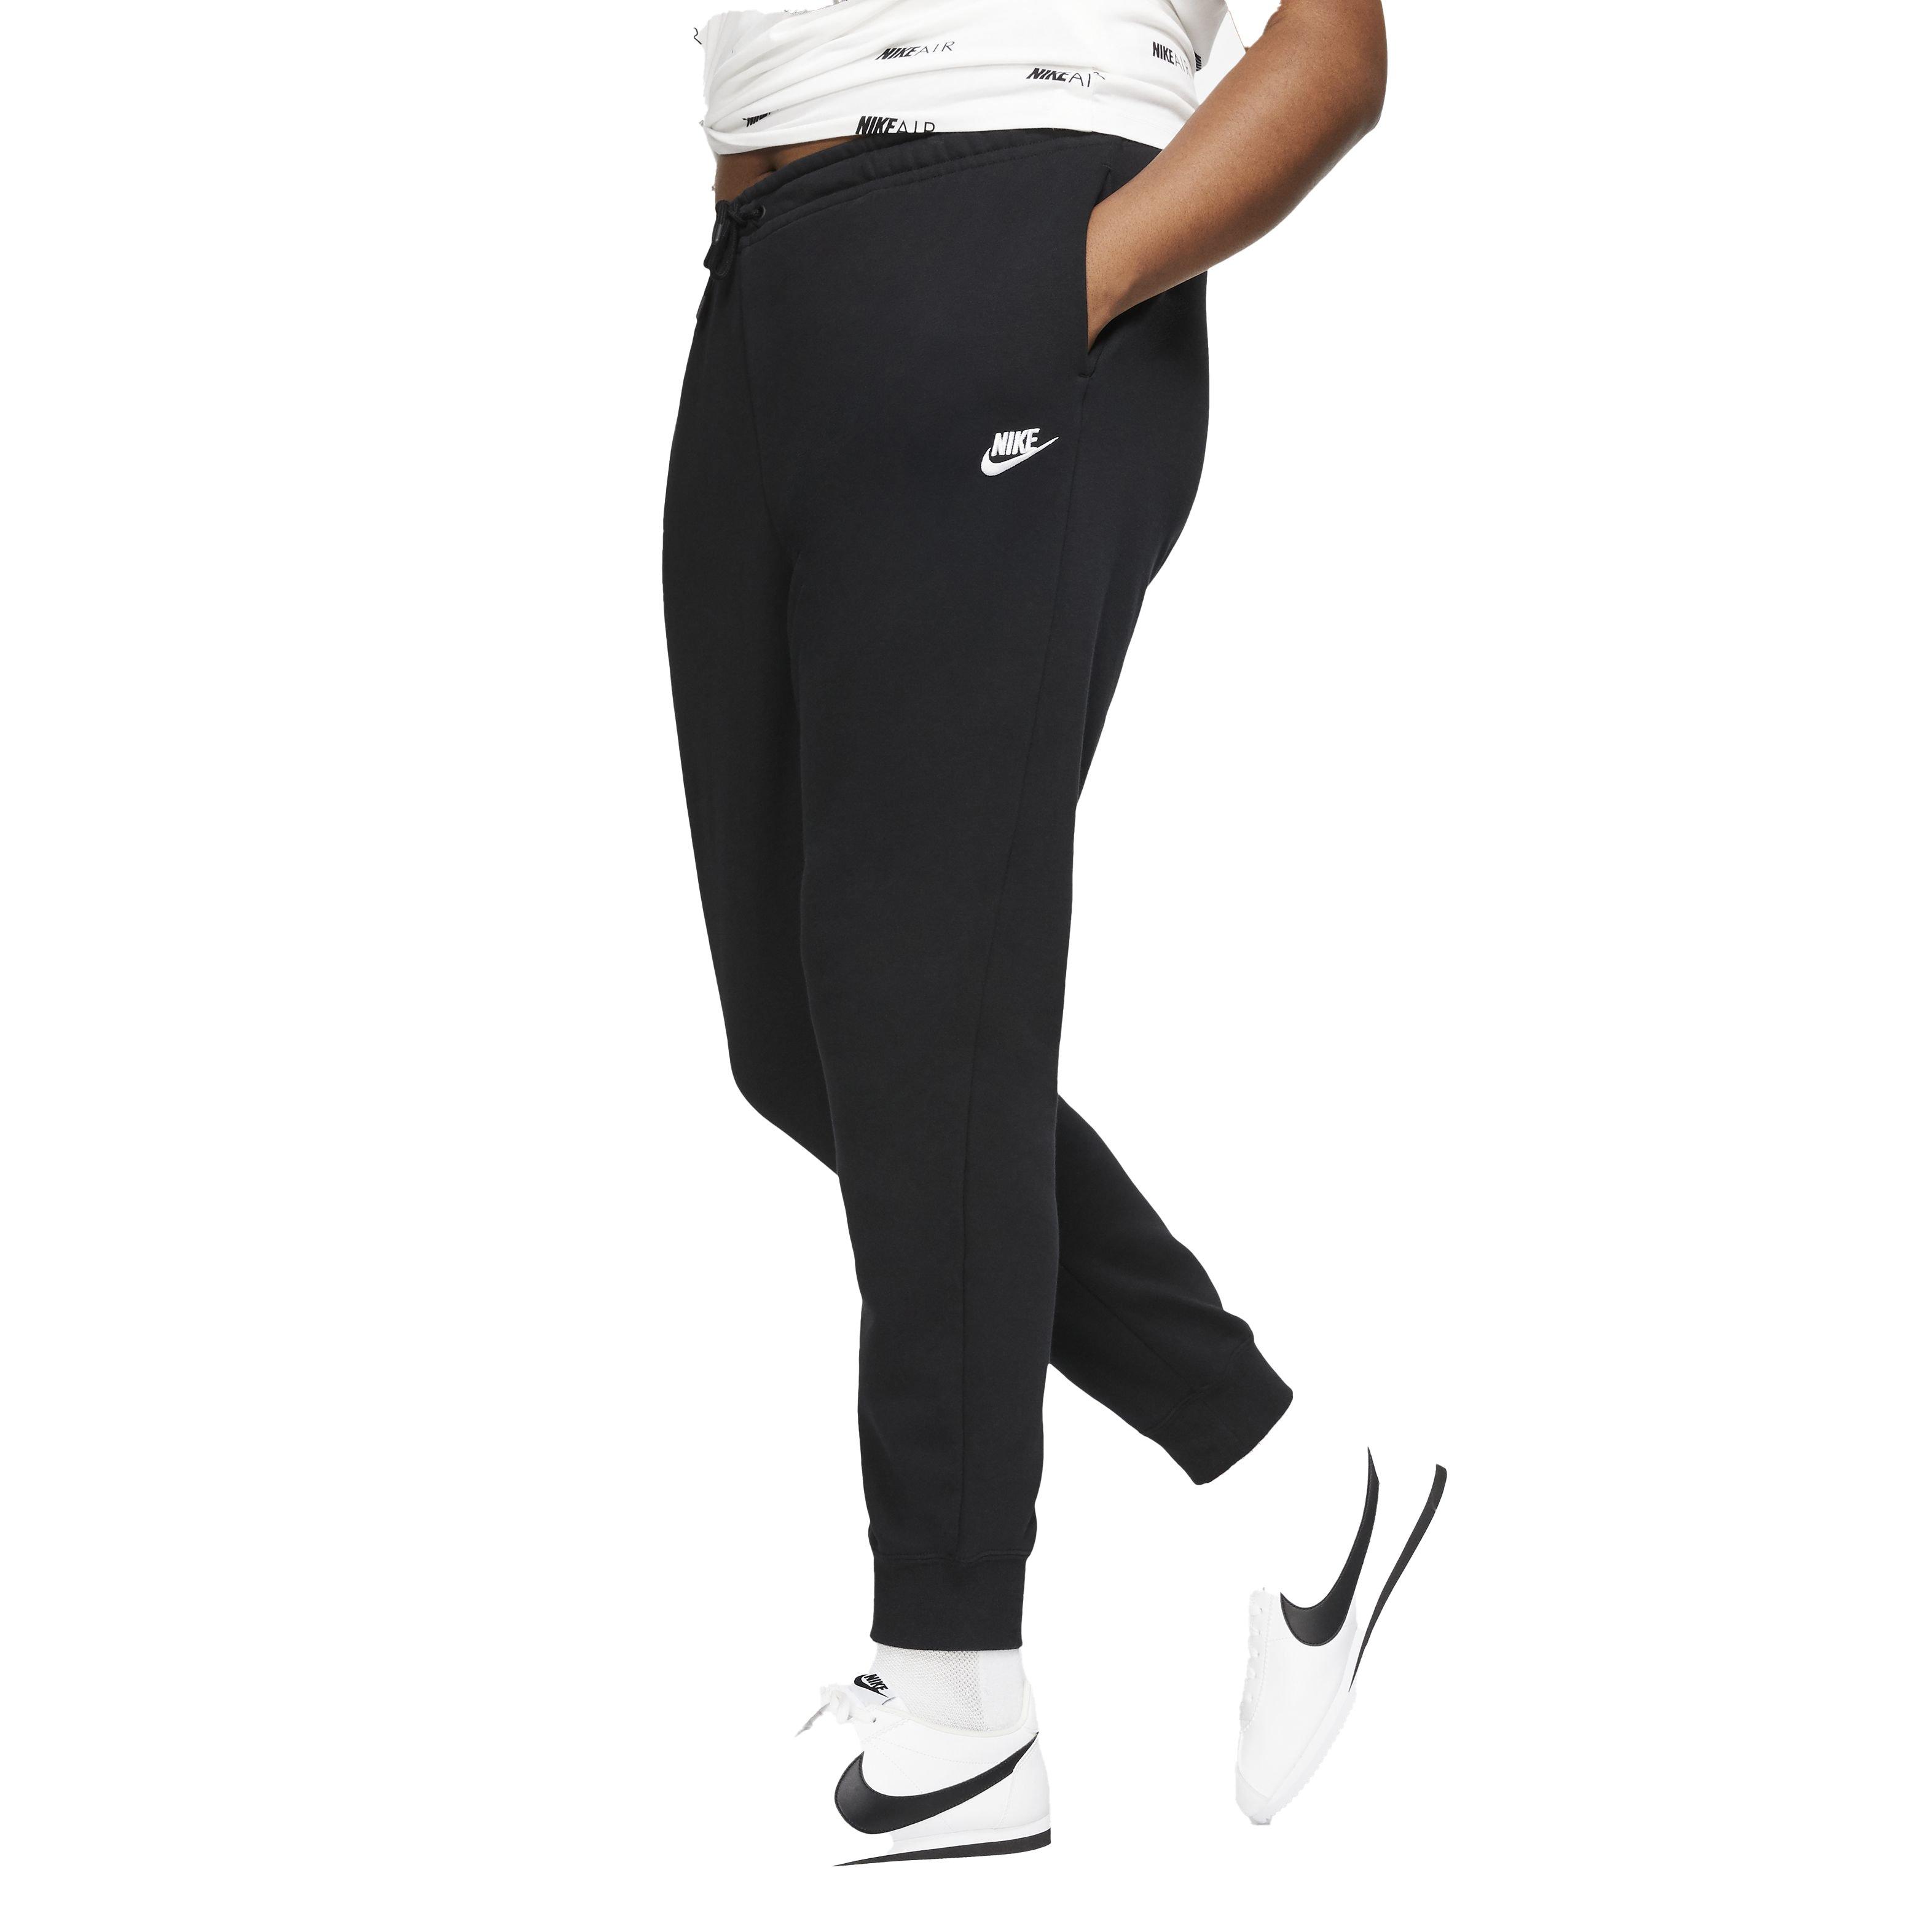 Nike Women's Plus Size Fleece Lined Jogger Athletic Pants (1X, Ghost)